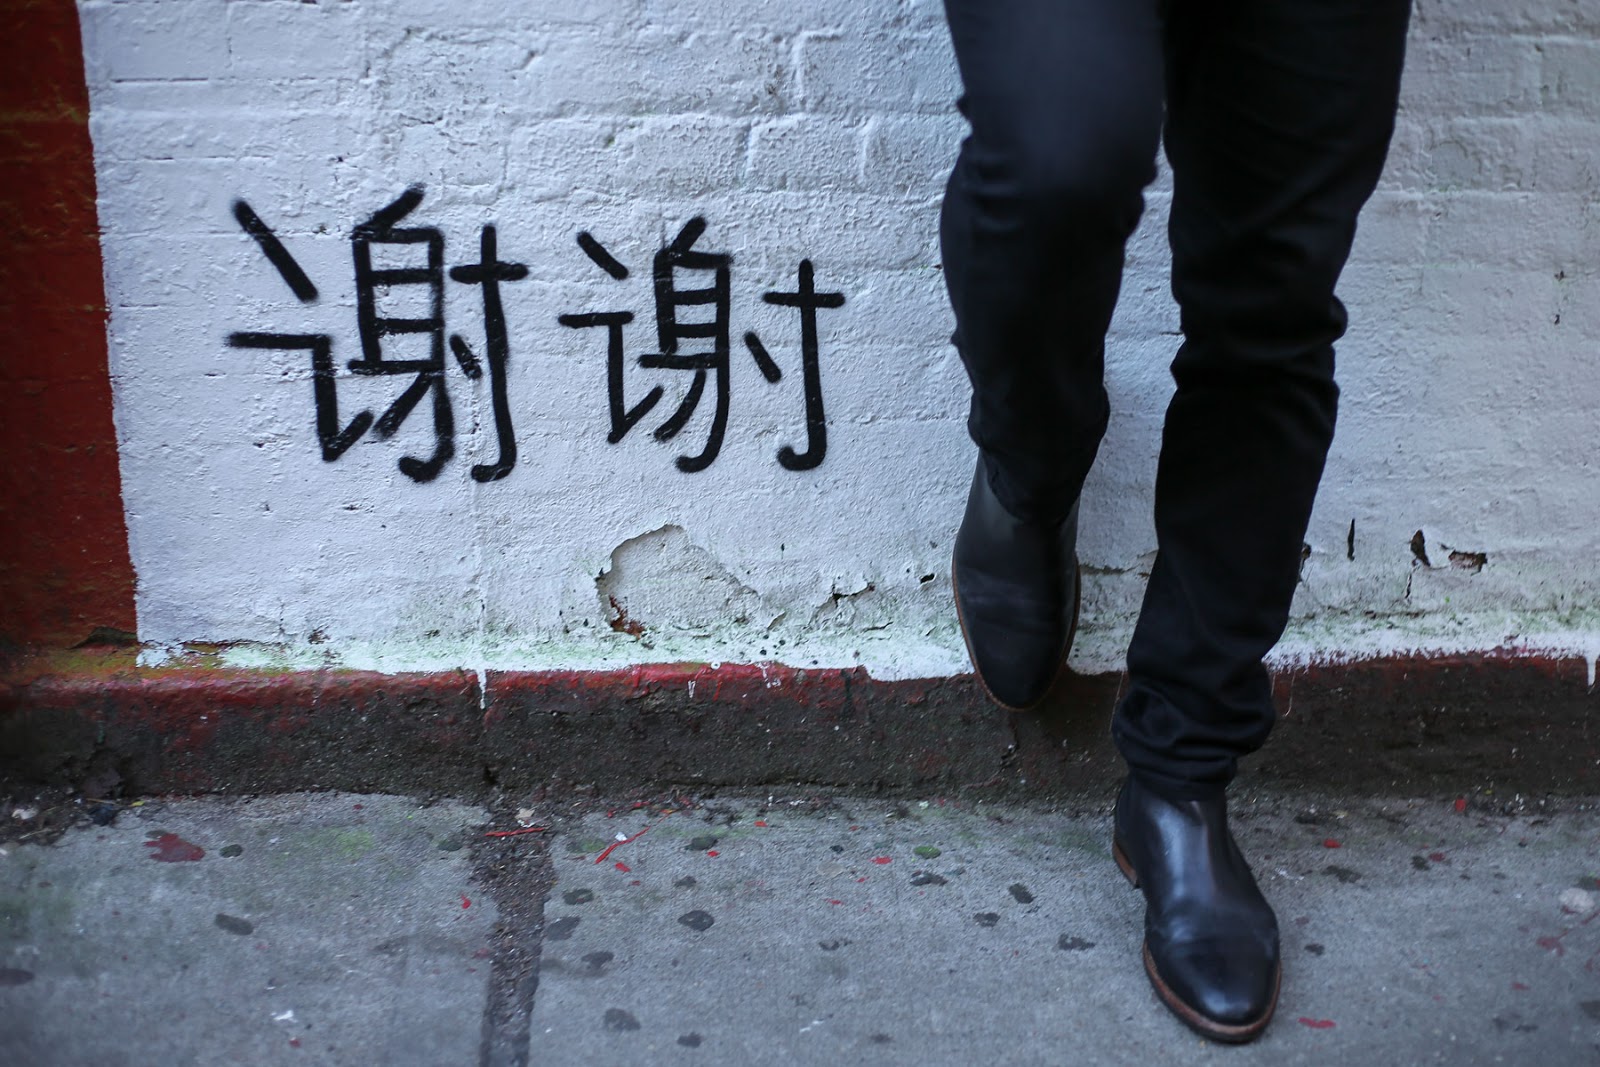 Leo Chan, Fashion Blogger in NYC, responds to Fox News Chinatown racist segment